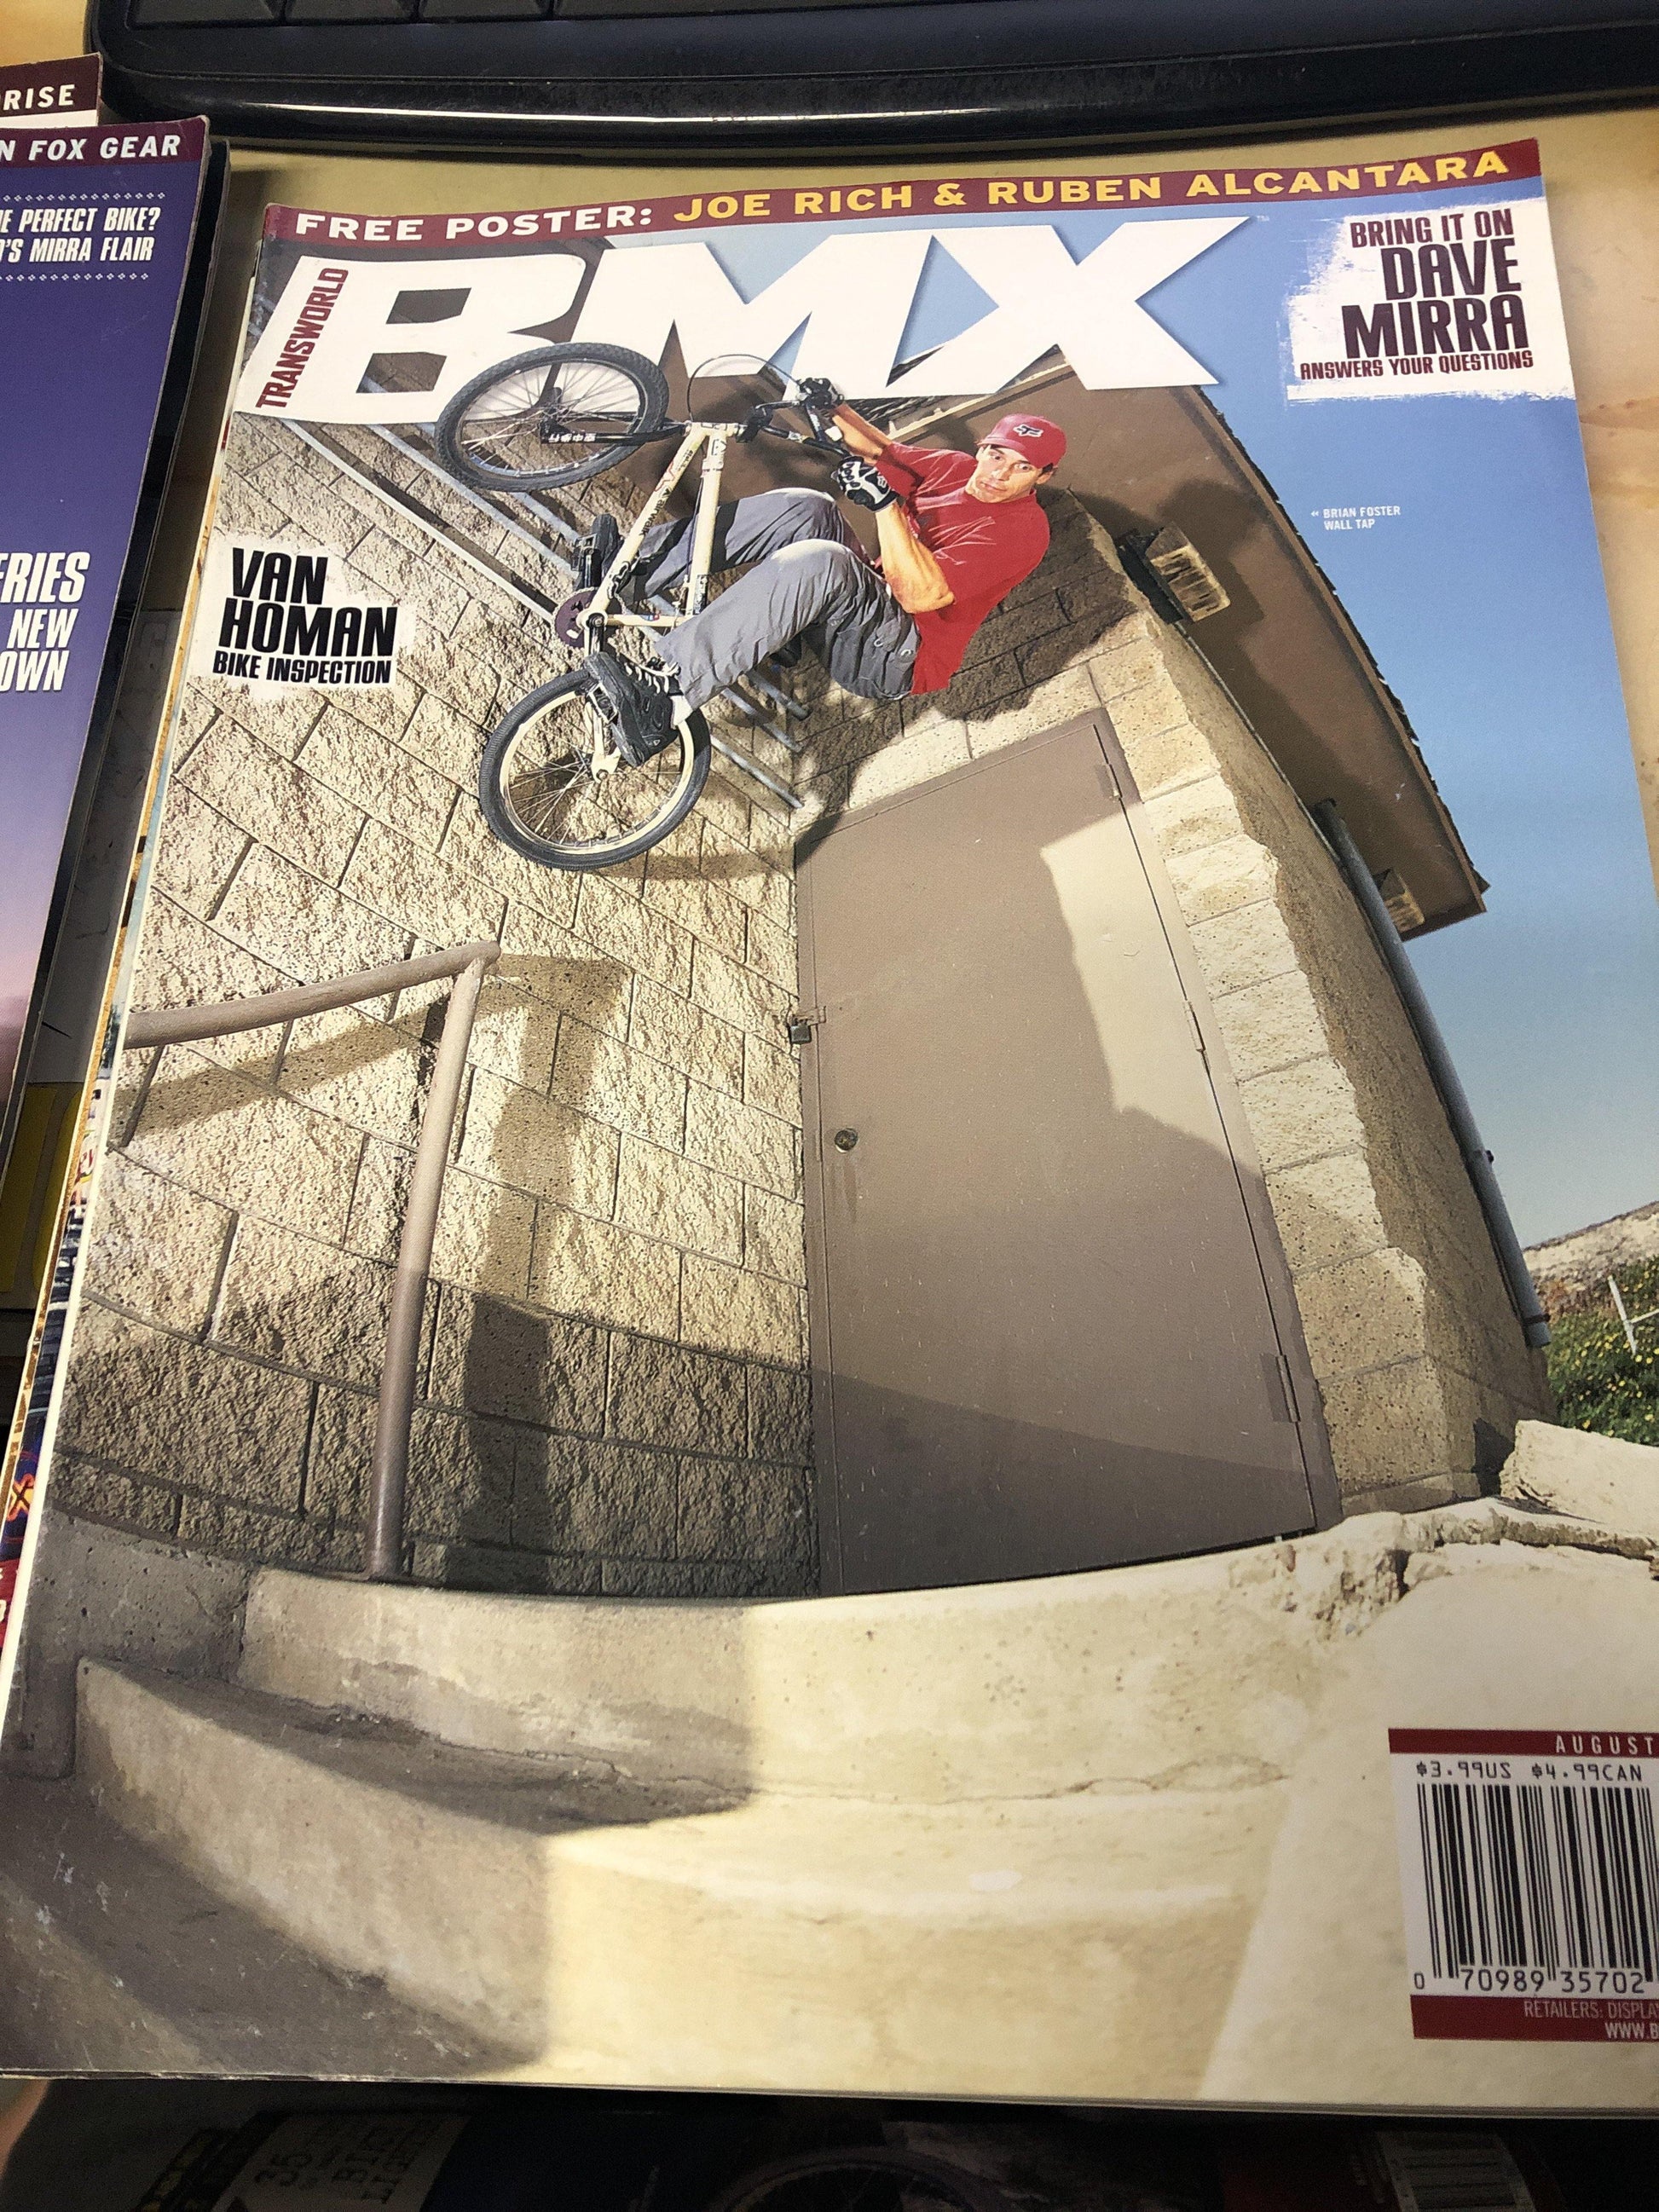 Transworld bmx magazine back issues 2002 - POWERS BMX